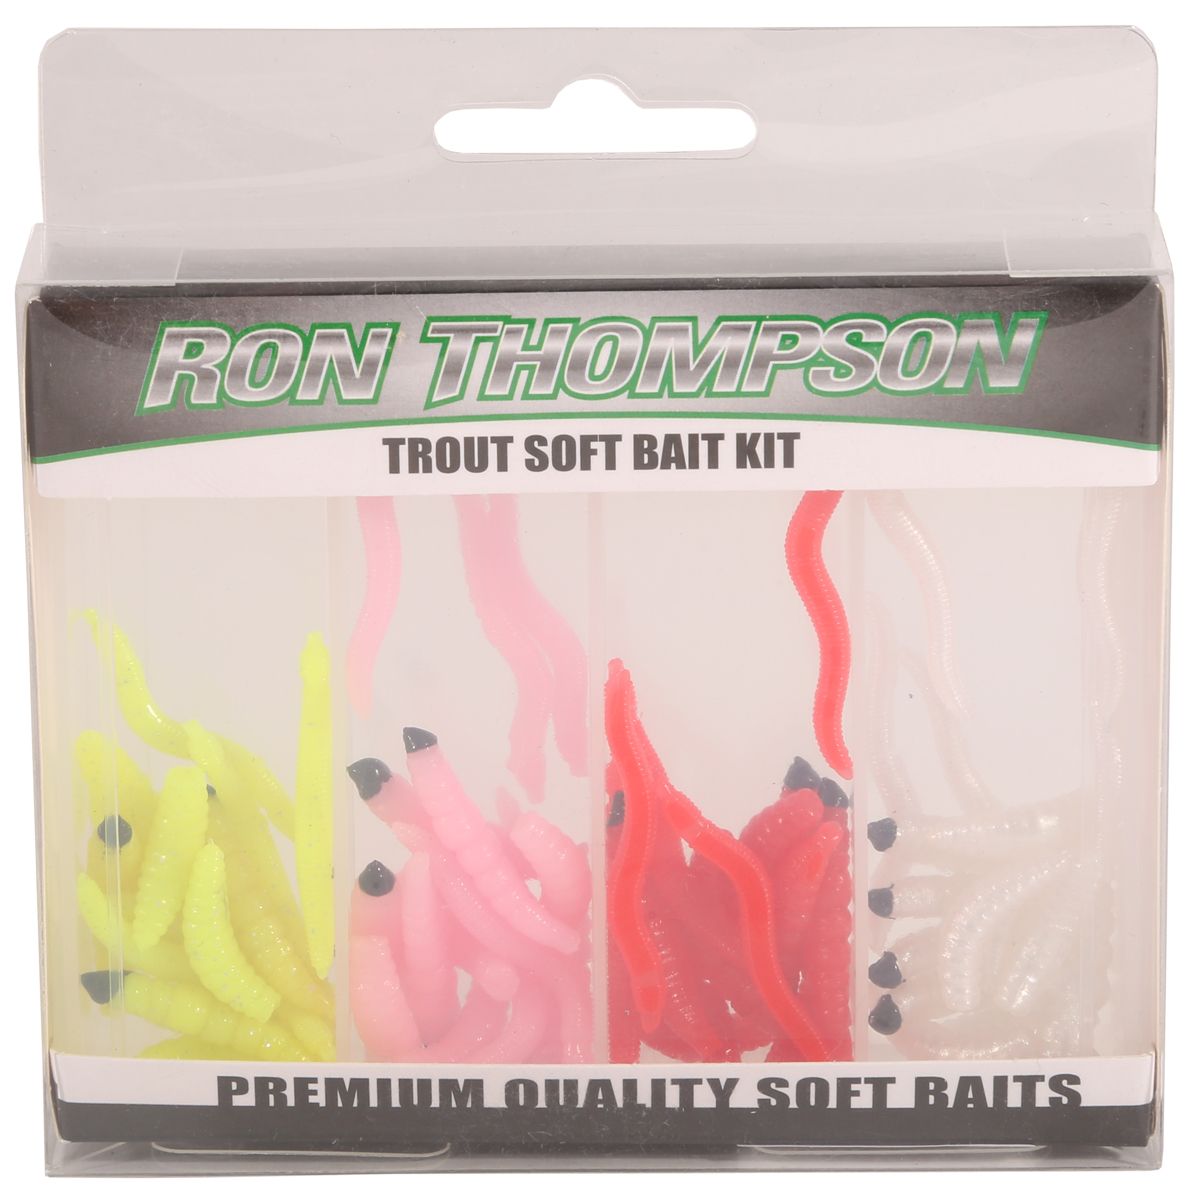 Ron Thompson Soft Worms Kit trout